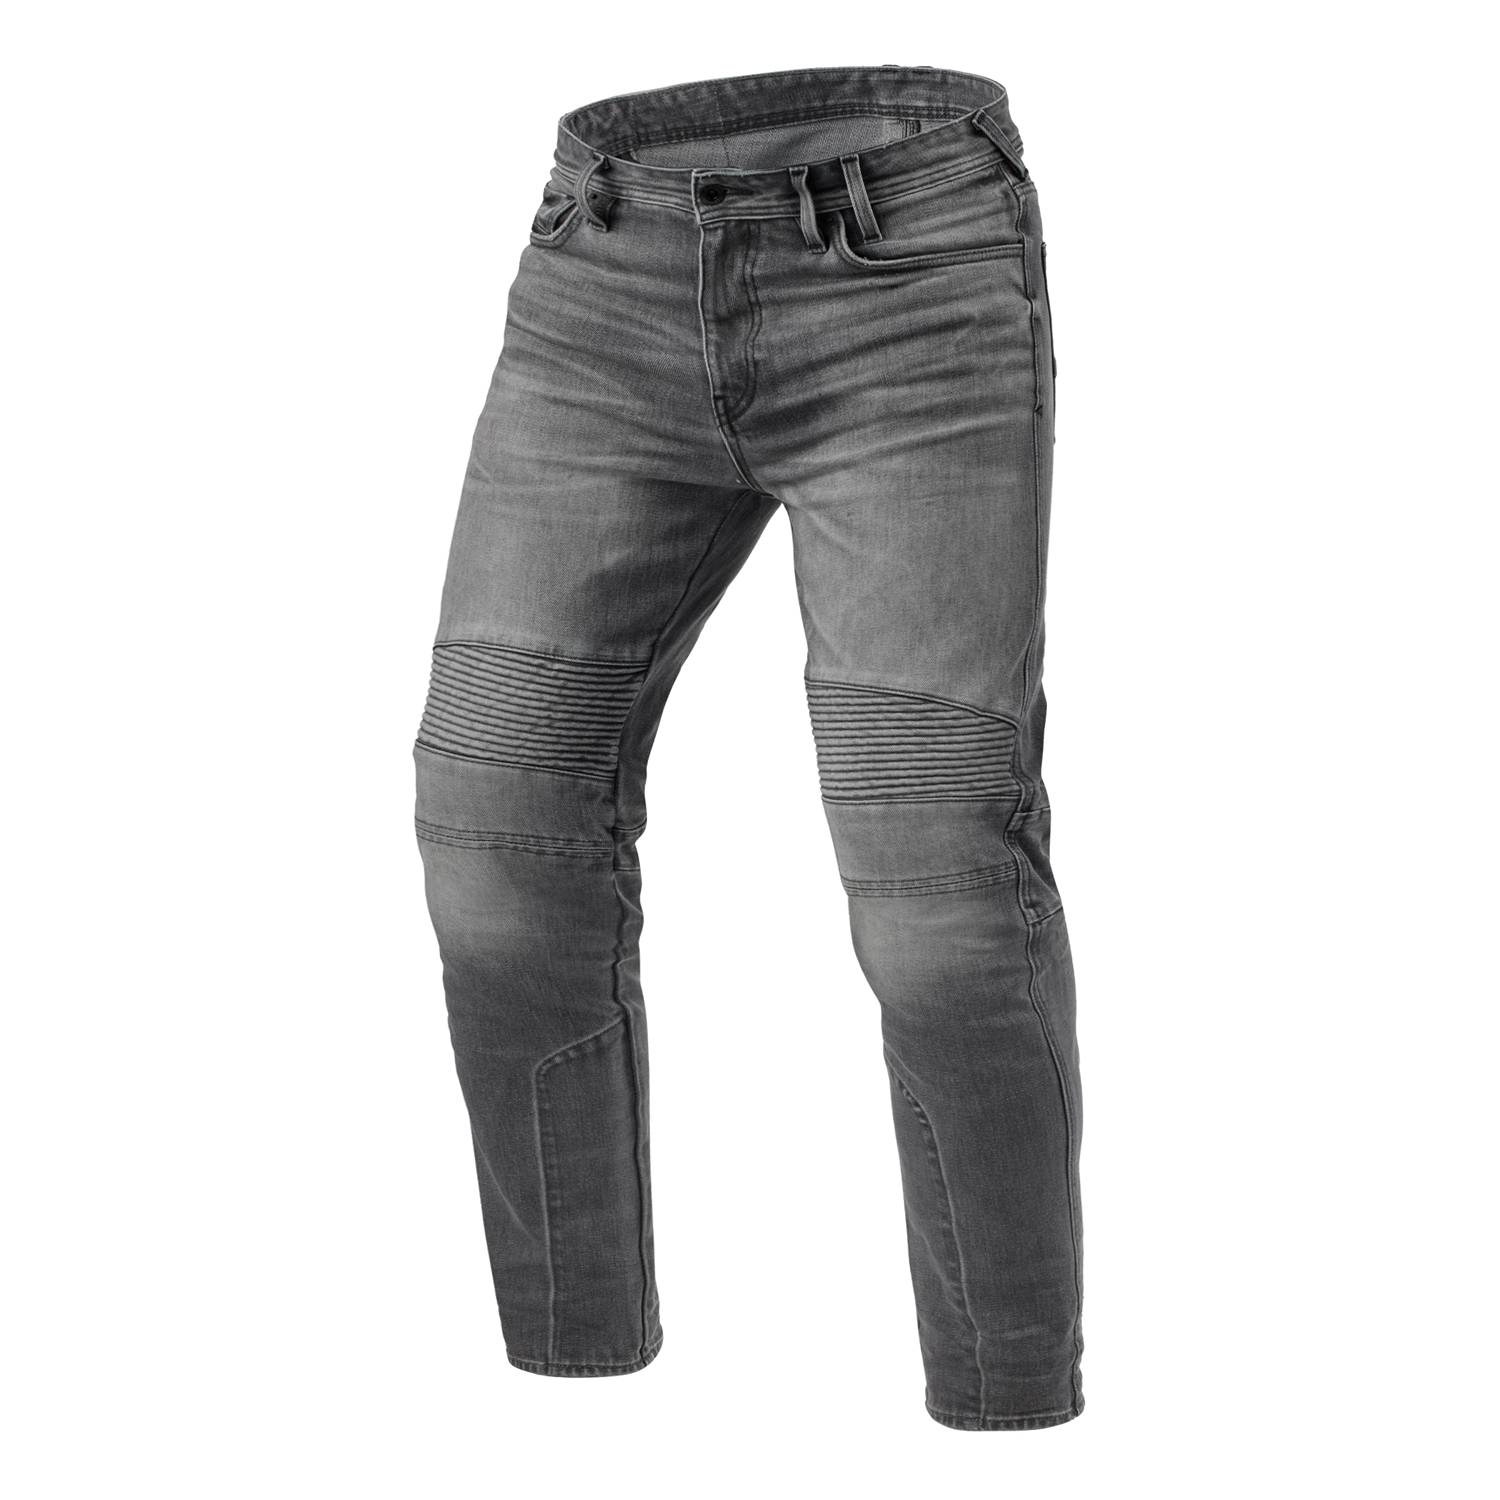 Image of REV'IT! Jeans Moto 2 TF Medium Grey Used L36 Motorcycle Jeans Size L36/W33 EN